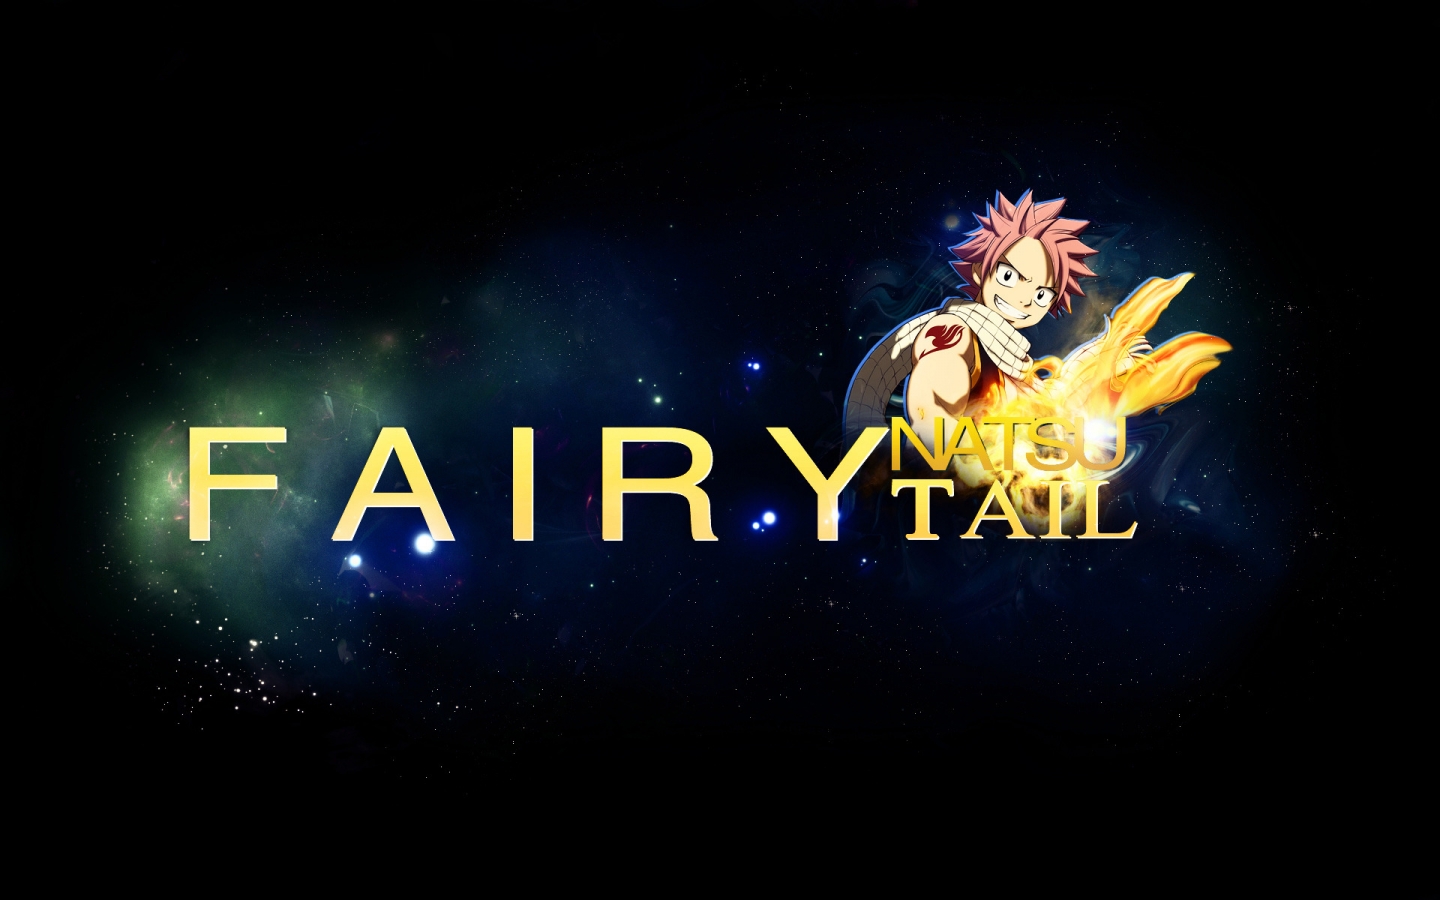 Fairy Tail Natsu for 1440 x 900 widescreen resolution